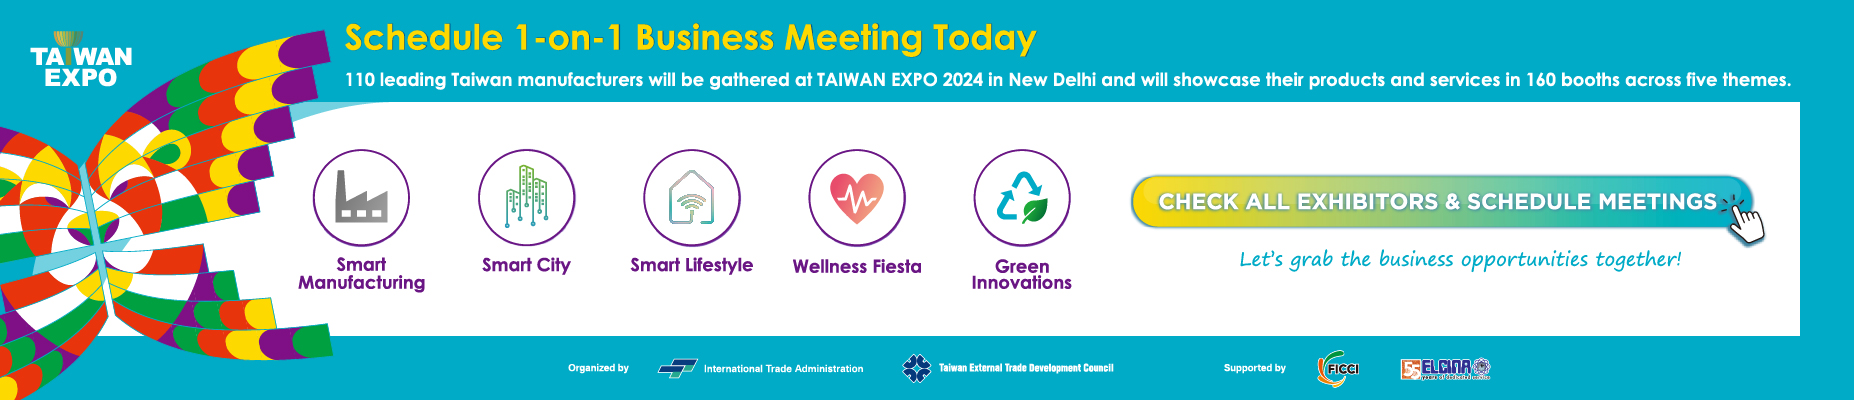 Taiwan Expo 2024